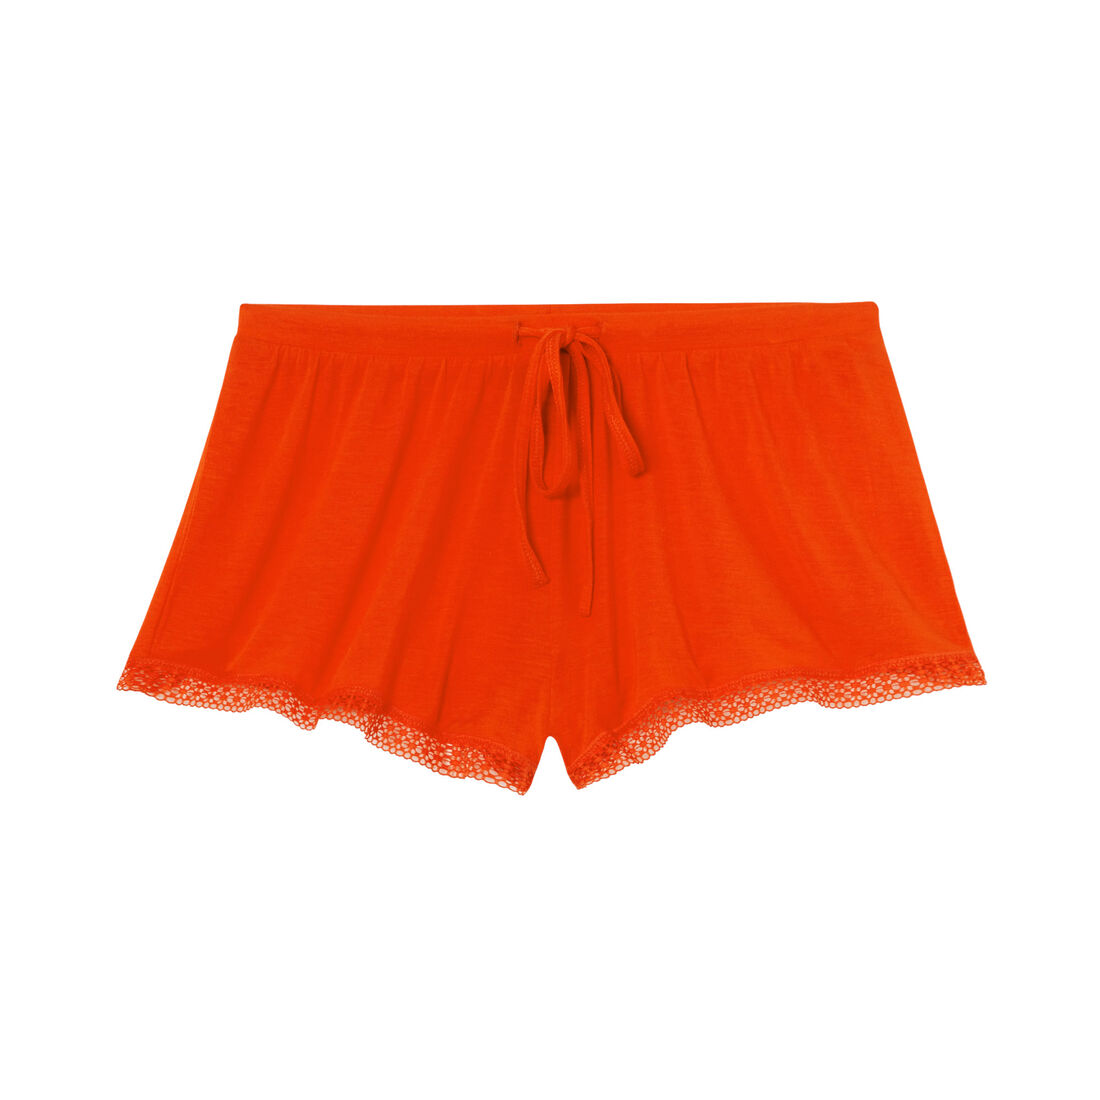 plain jersey shorts - red-orange;